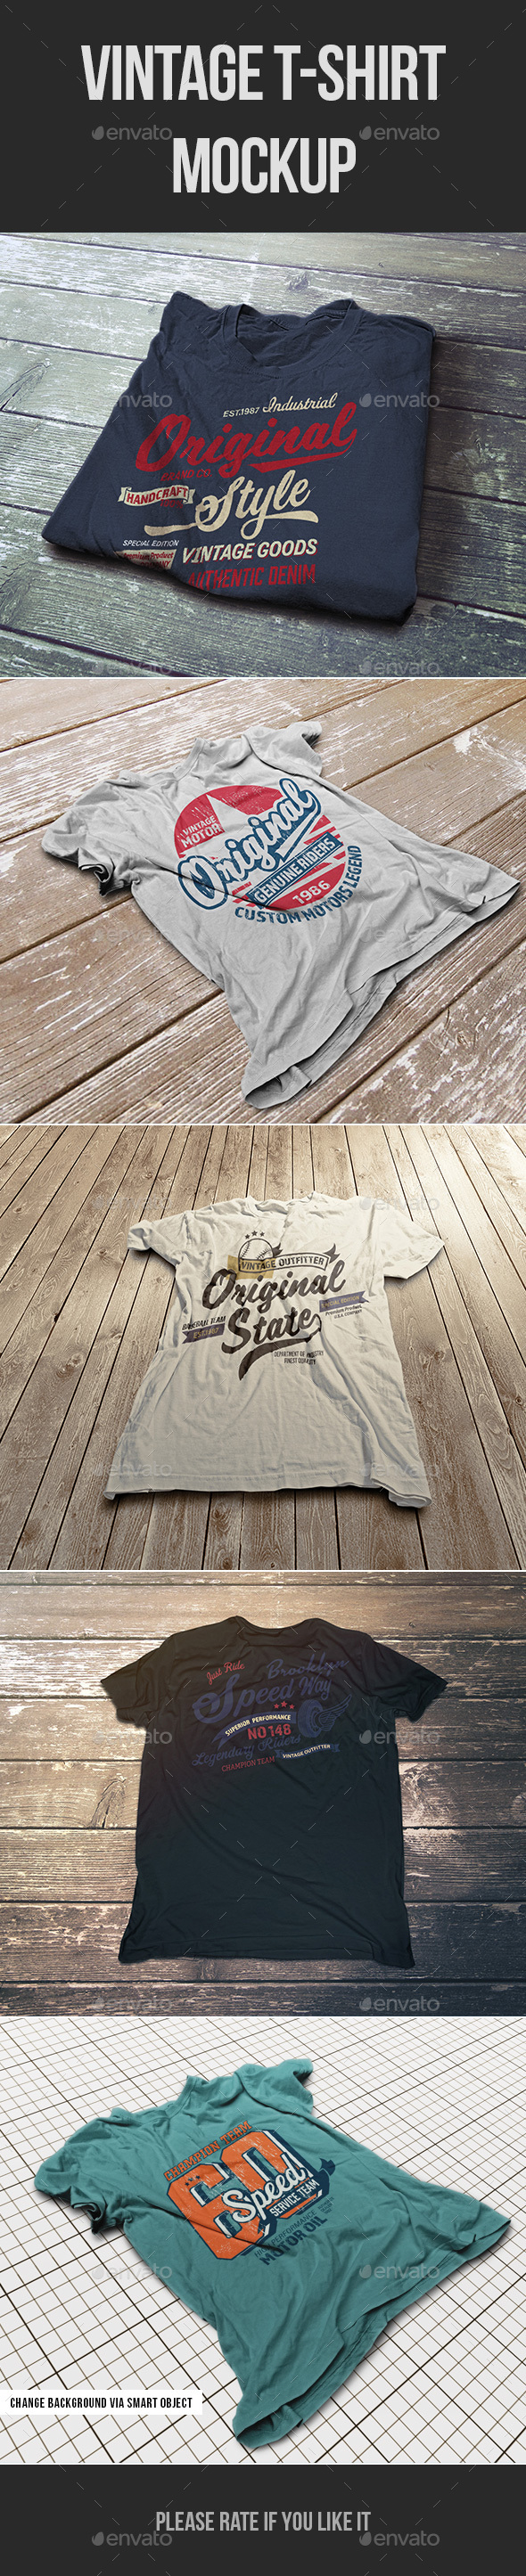 Download Vintage T-Shirt Mockup by dgas99 | GraphicRiver